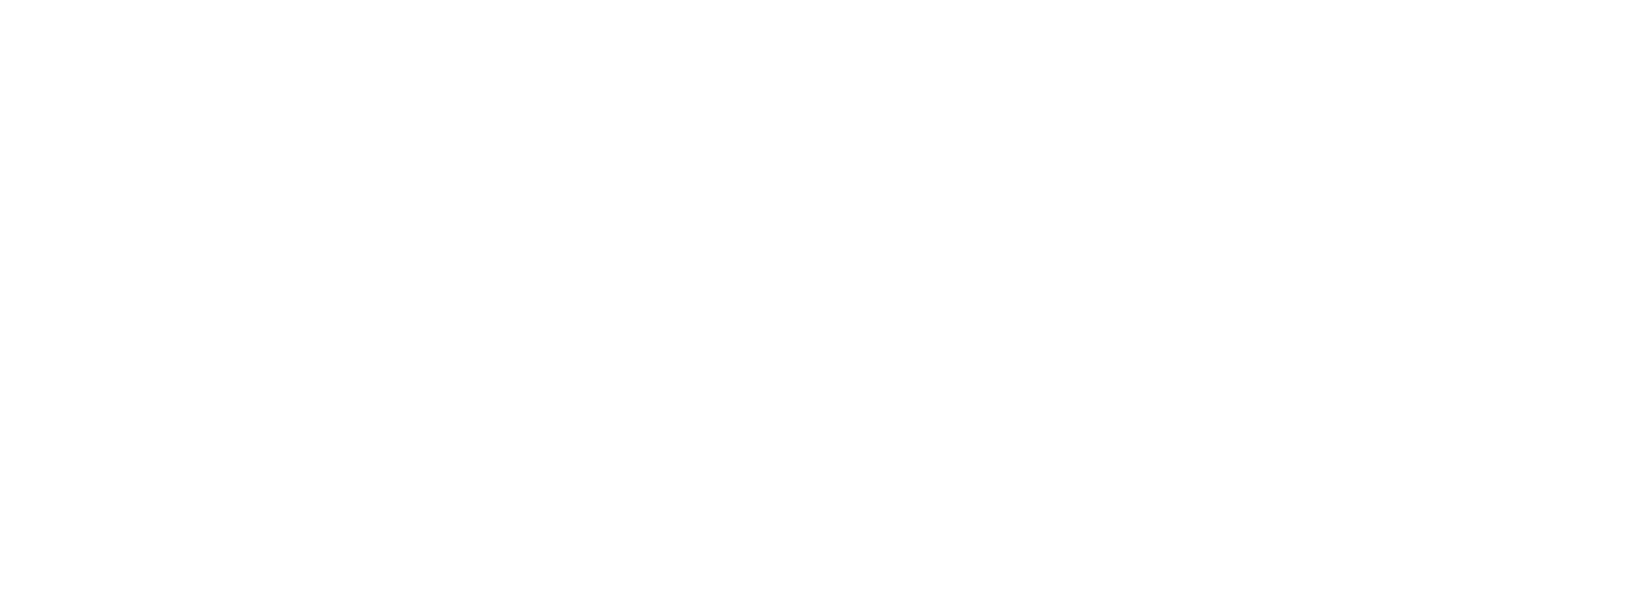 Pernod Ricard Logo groß für dunkle Hintergründe (transparentes PNG)